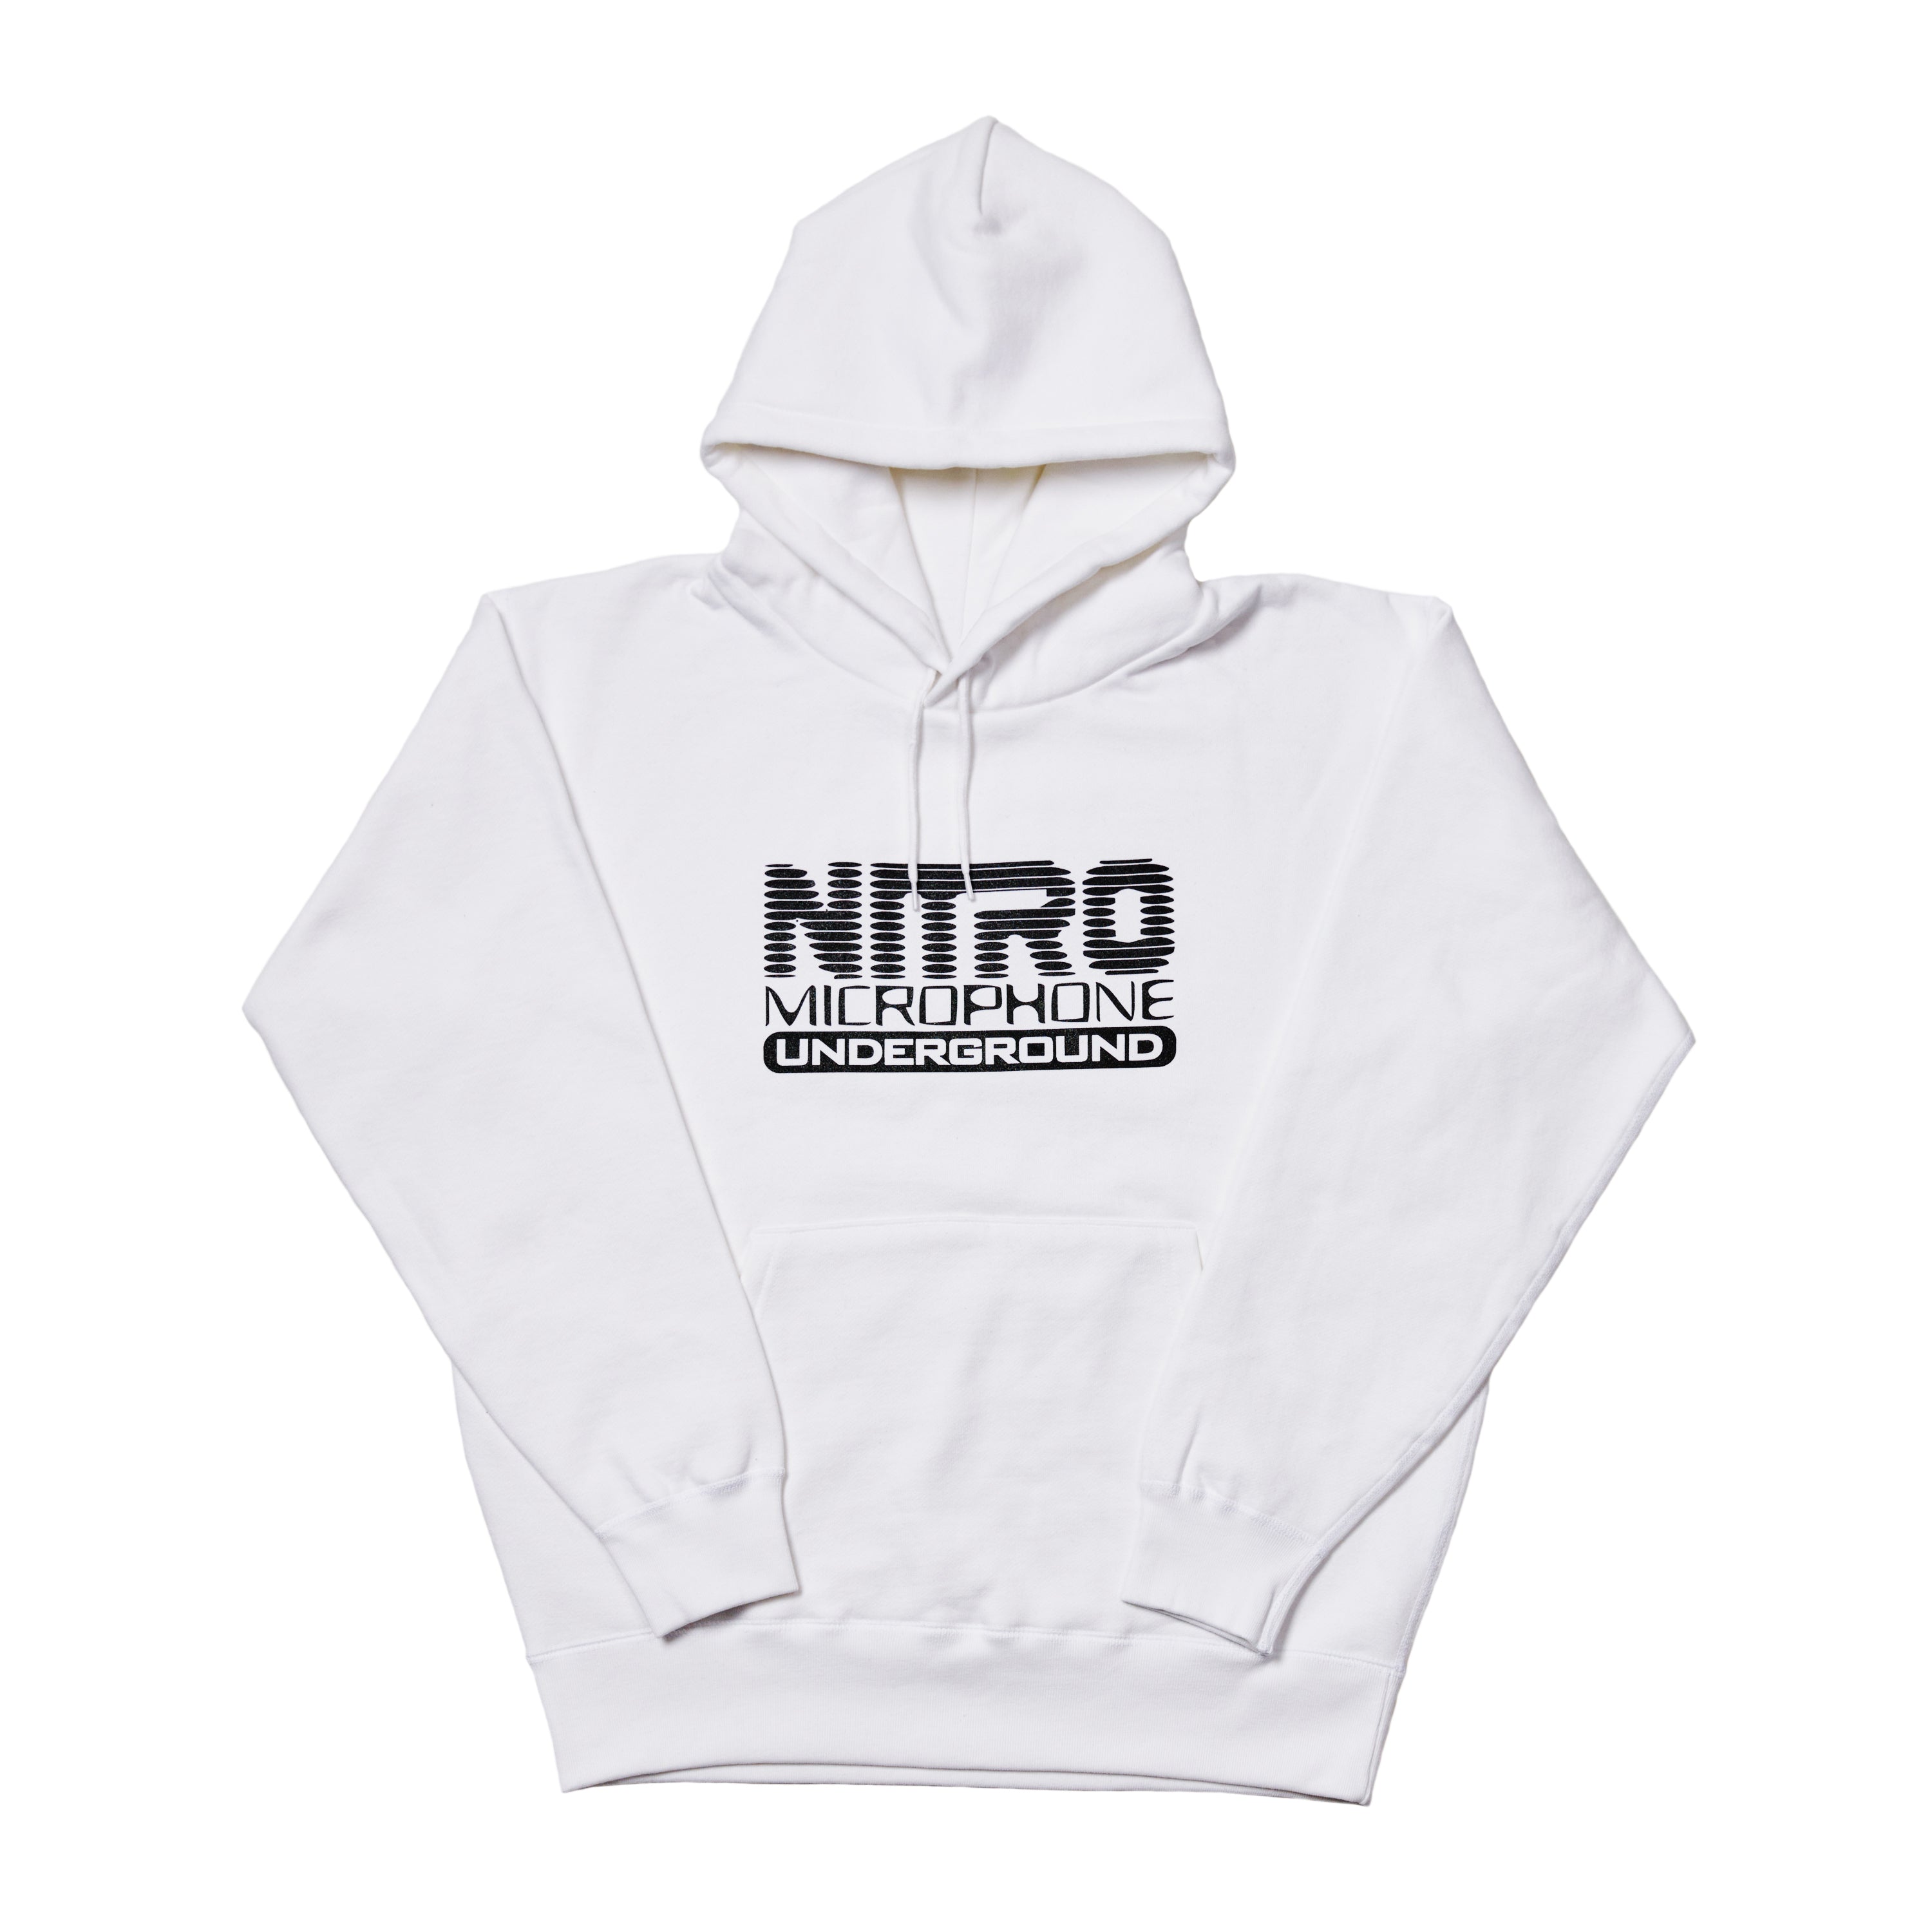 nitro microphone underground logo hoodieトップス